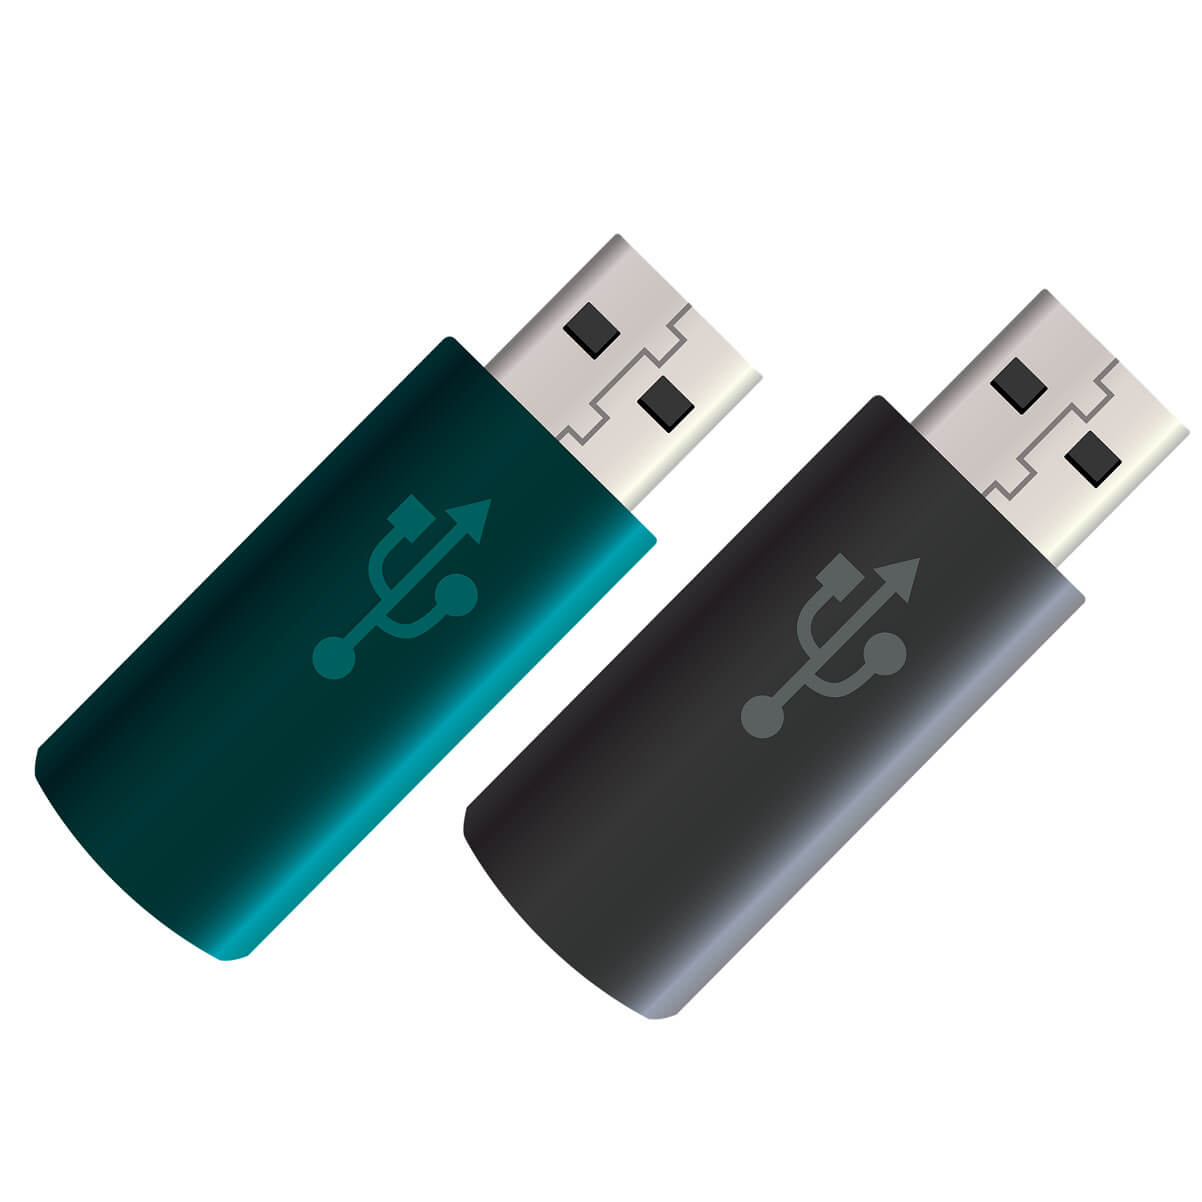 Download Multi-flash USB Devices Driver